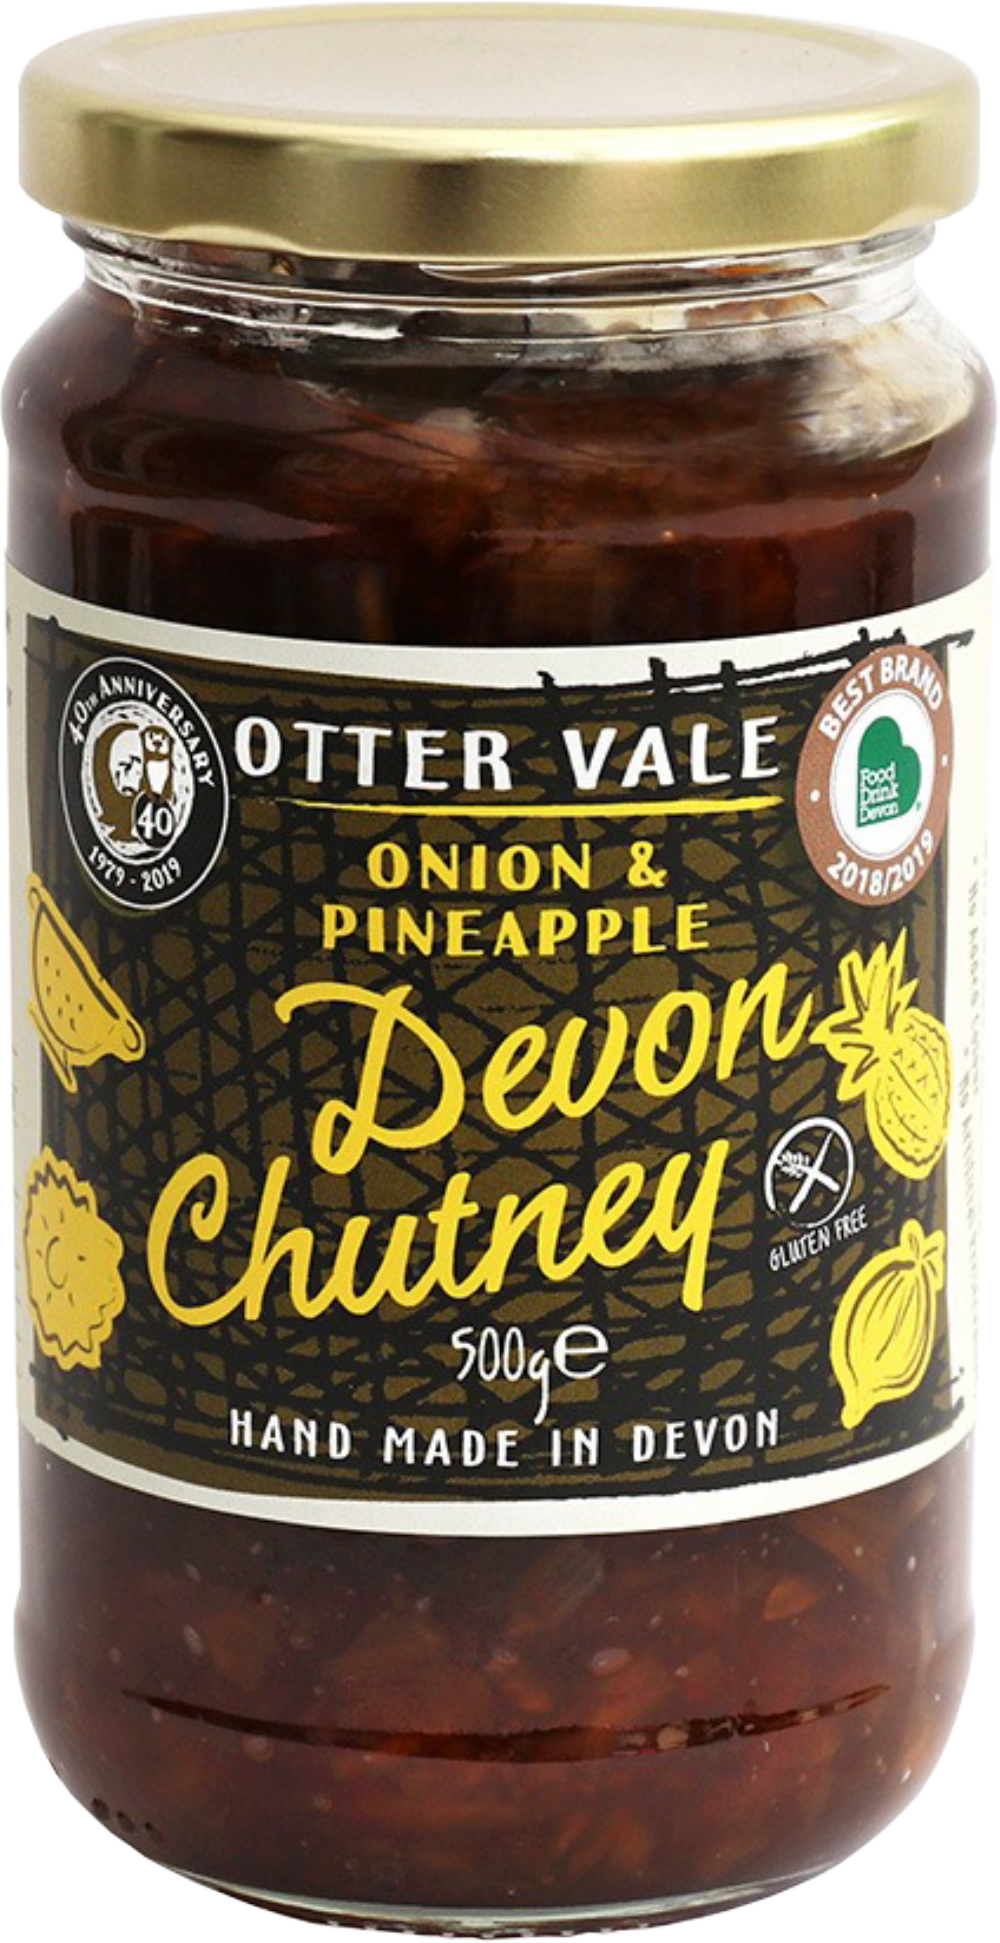 OTTER VALE Devon Chutney (Onion & Pineapple) 500g